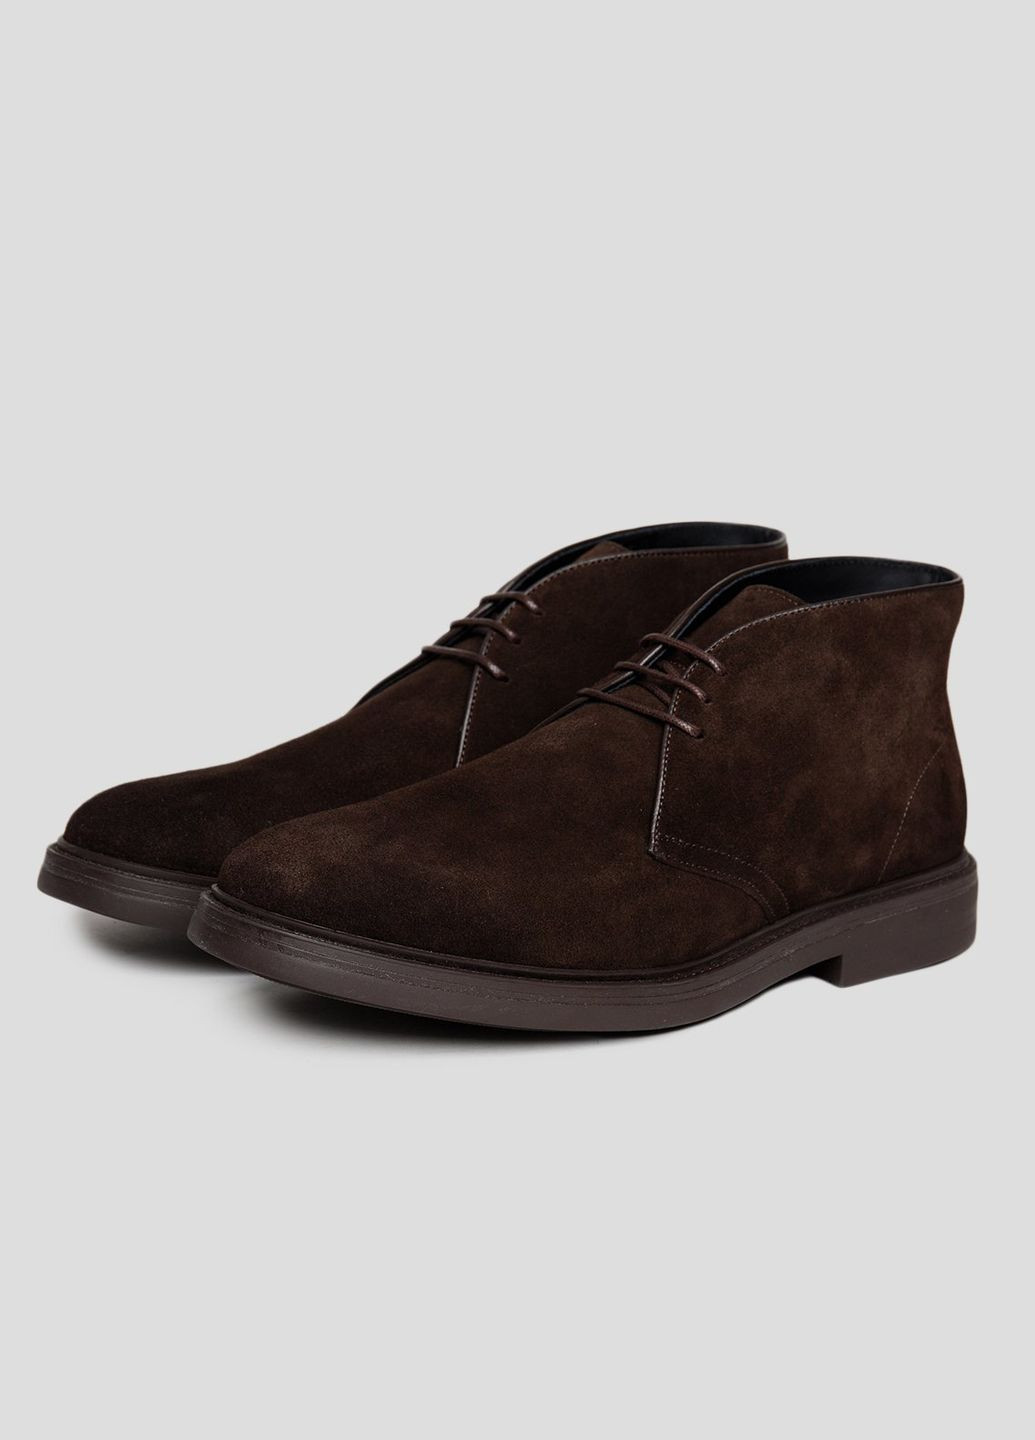 Коричневые осенние темно-коричневые замшевые ботинки a.Testoni